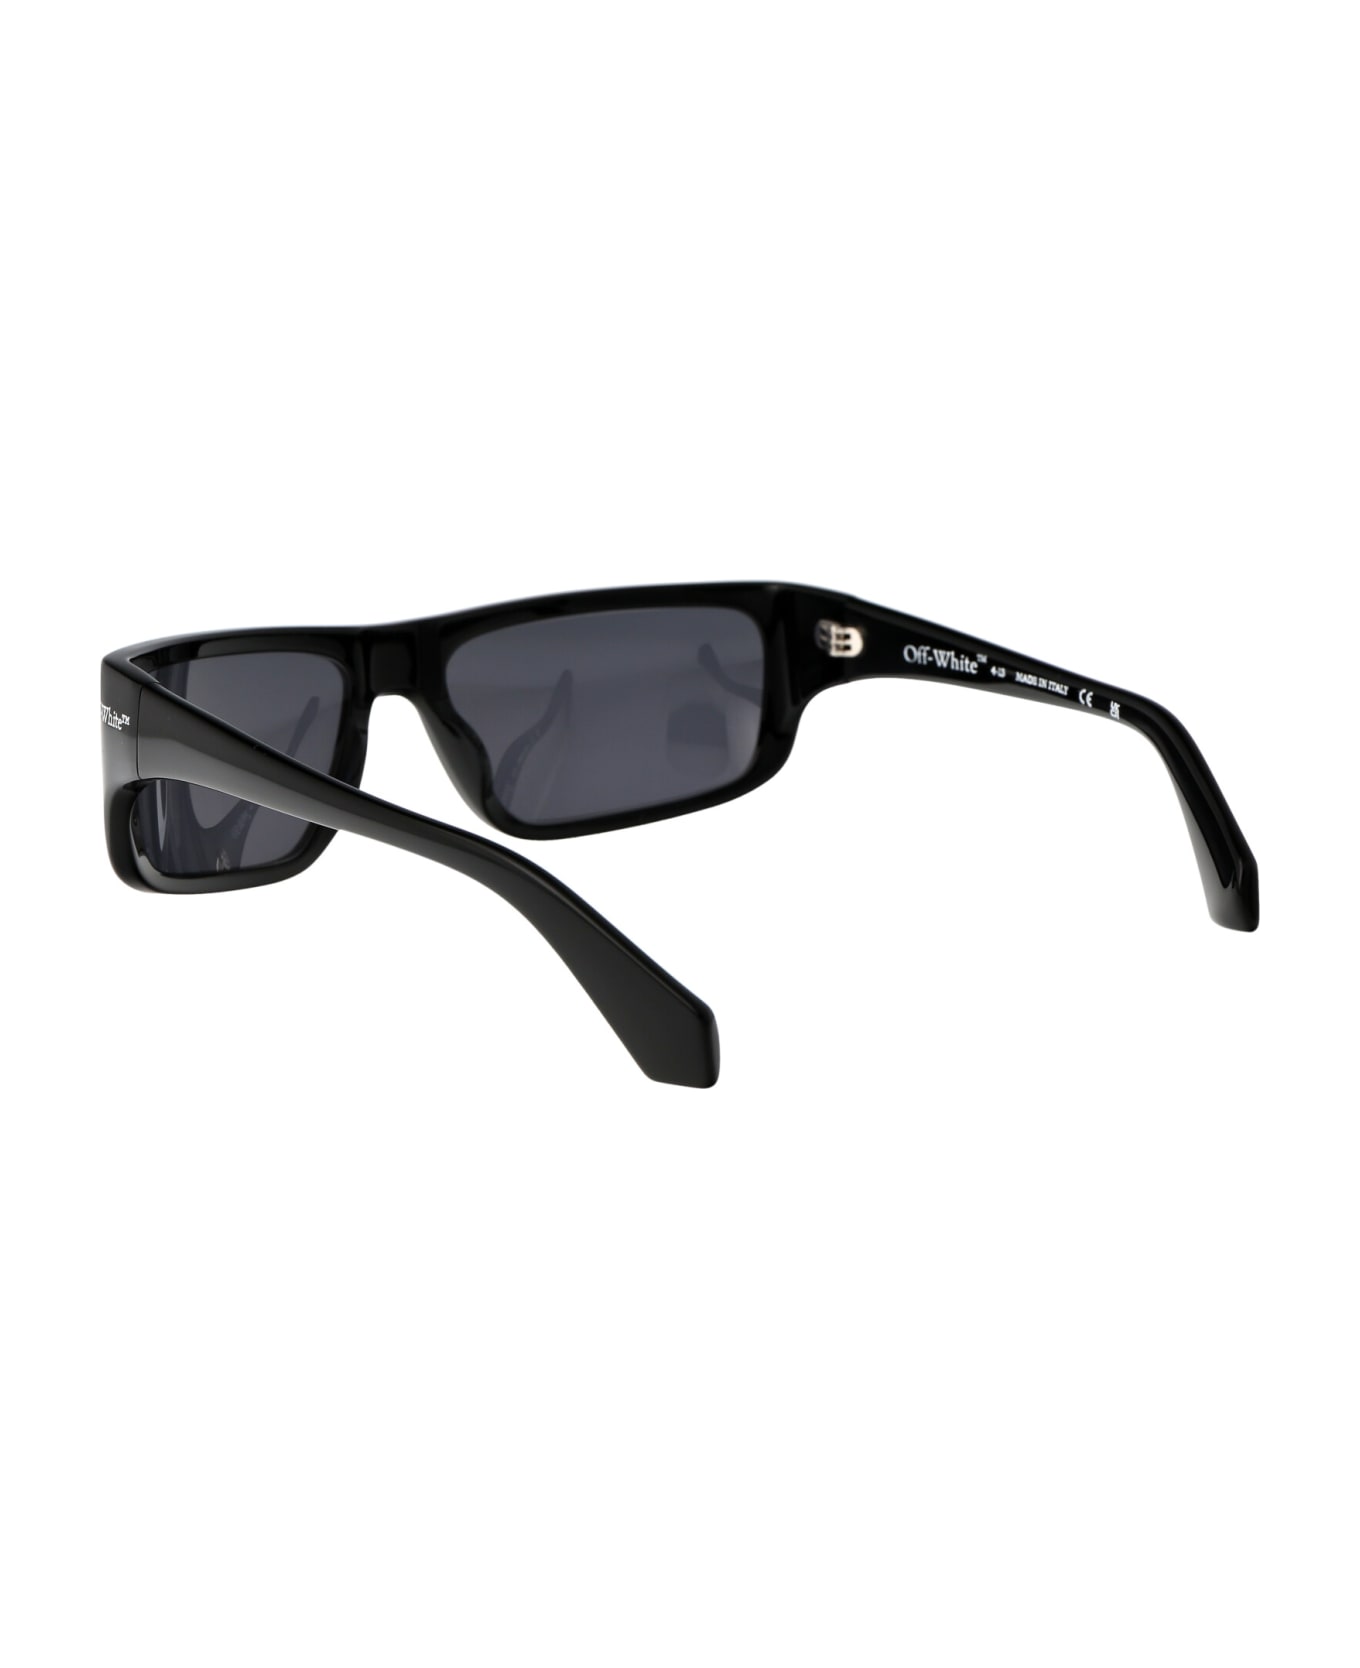 Off-White Bologna Rectangular Frame Sunglasses - 1007 BLACK